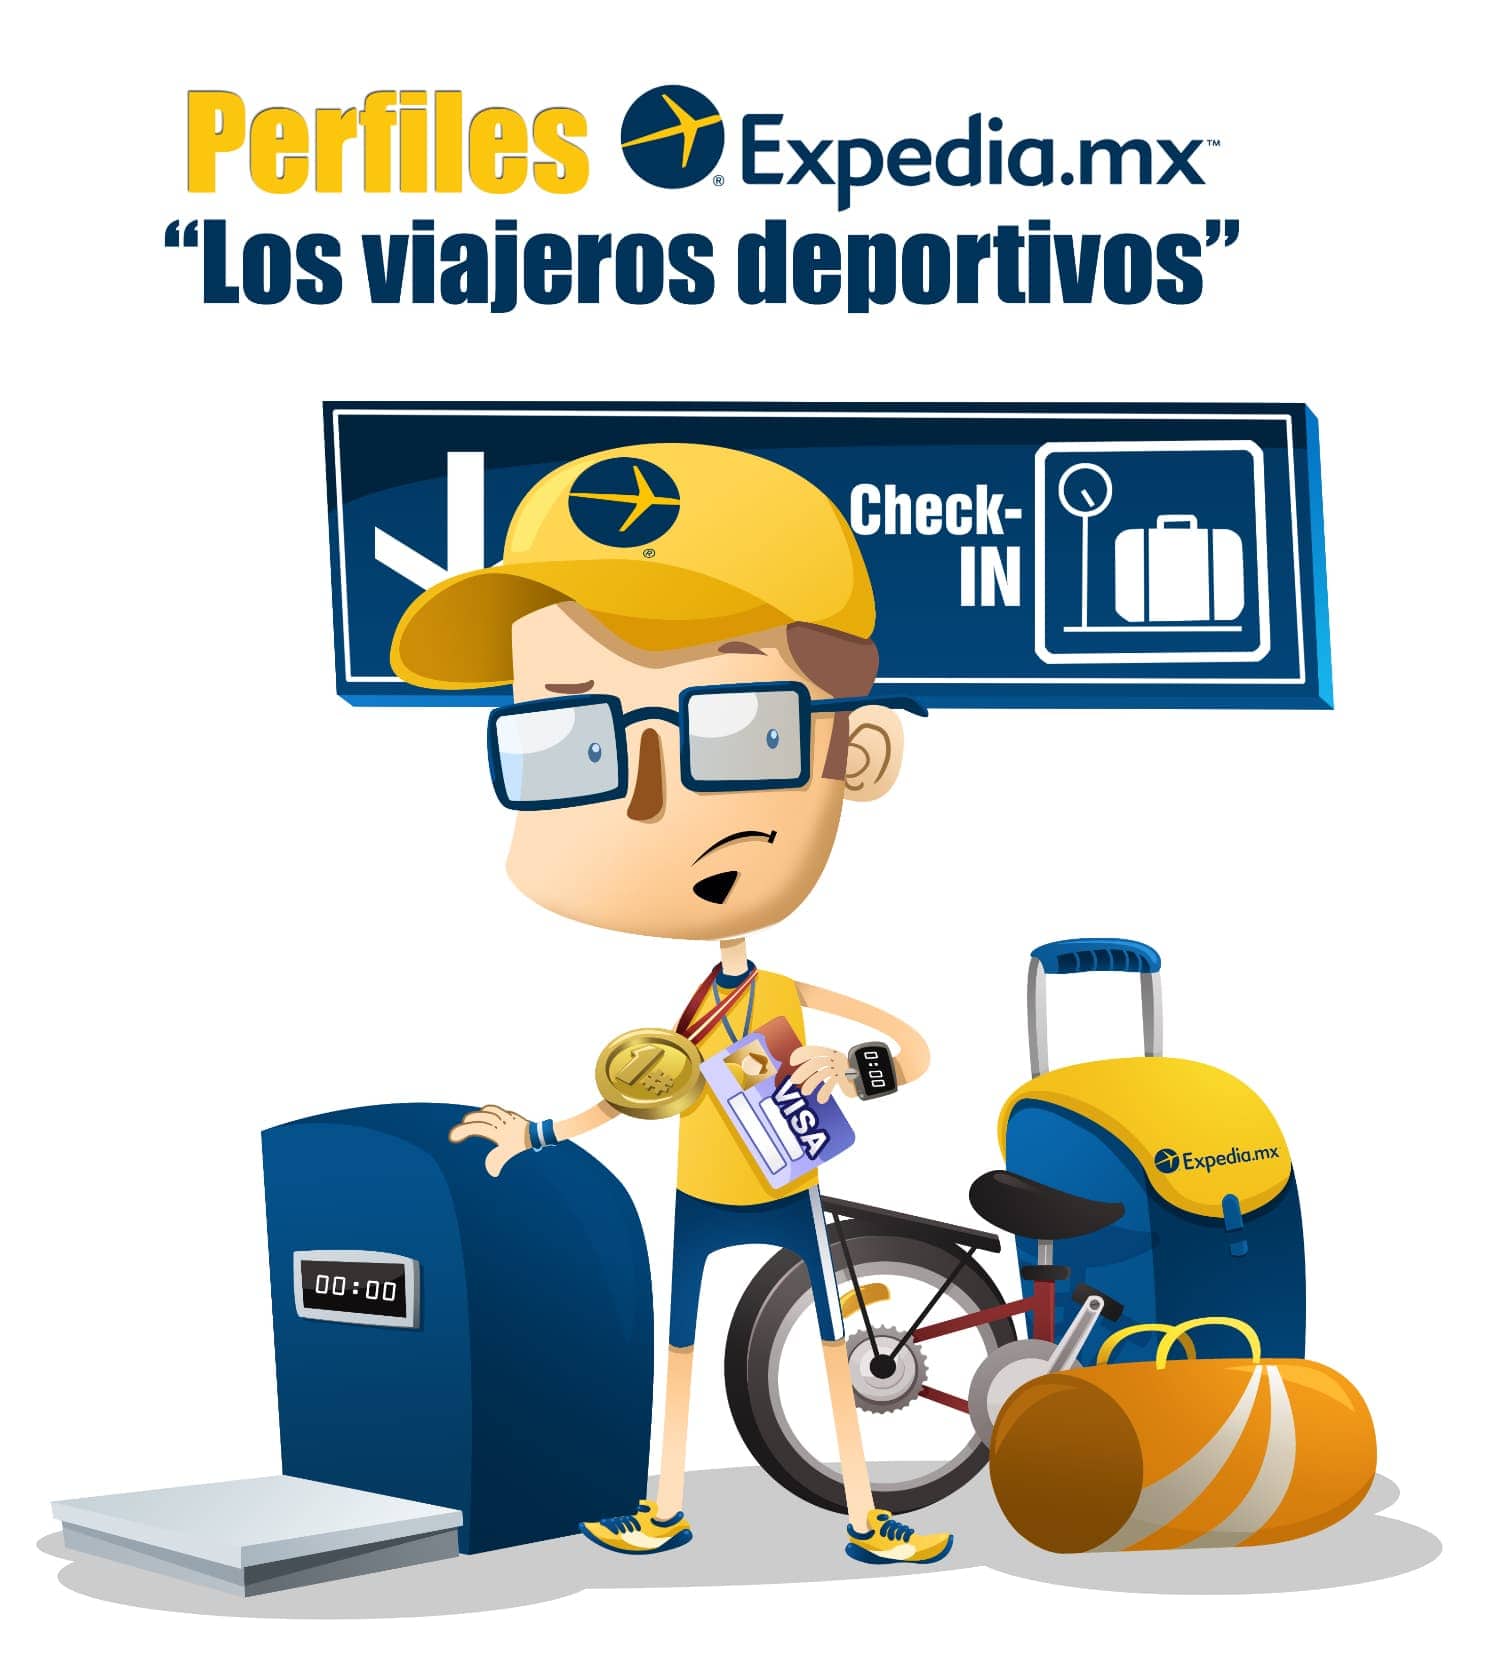 Perfiles Expedia.mx - 2) Los viajeros deportivos